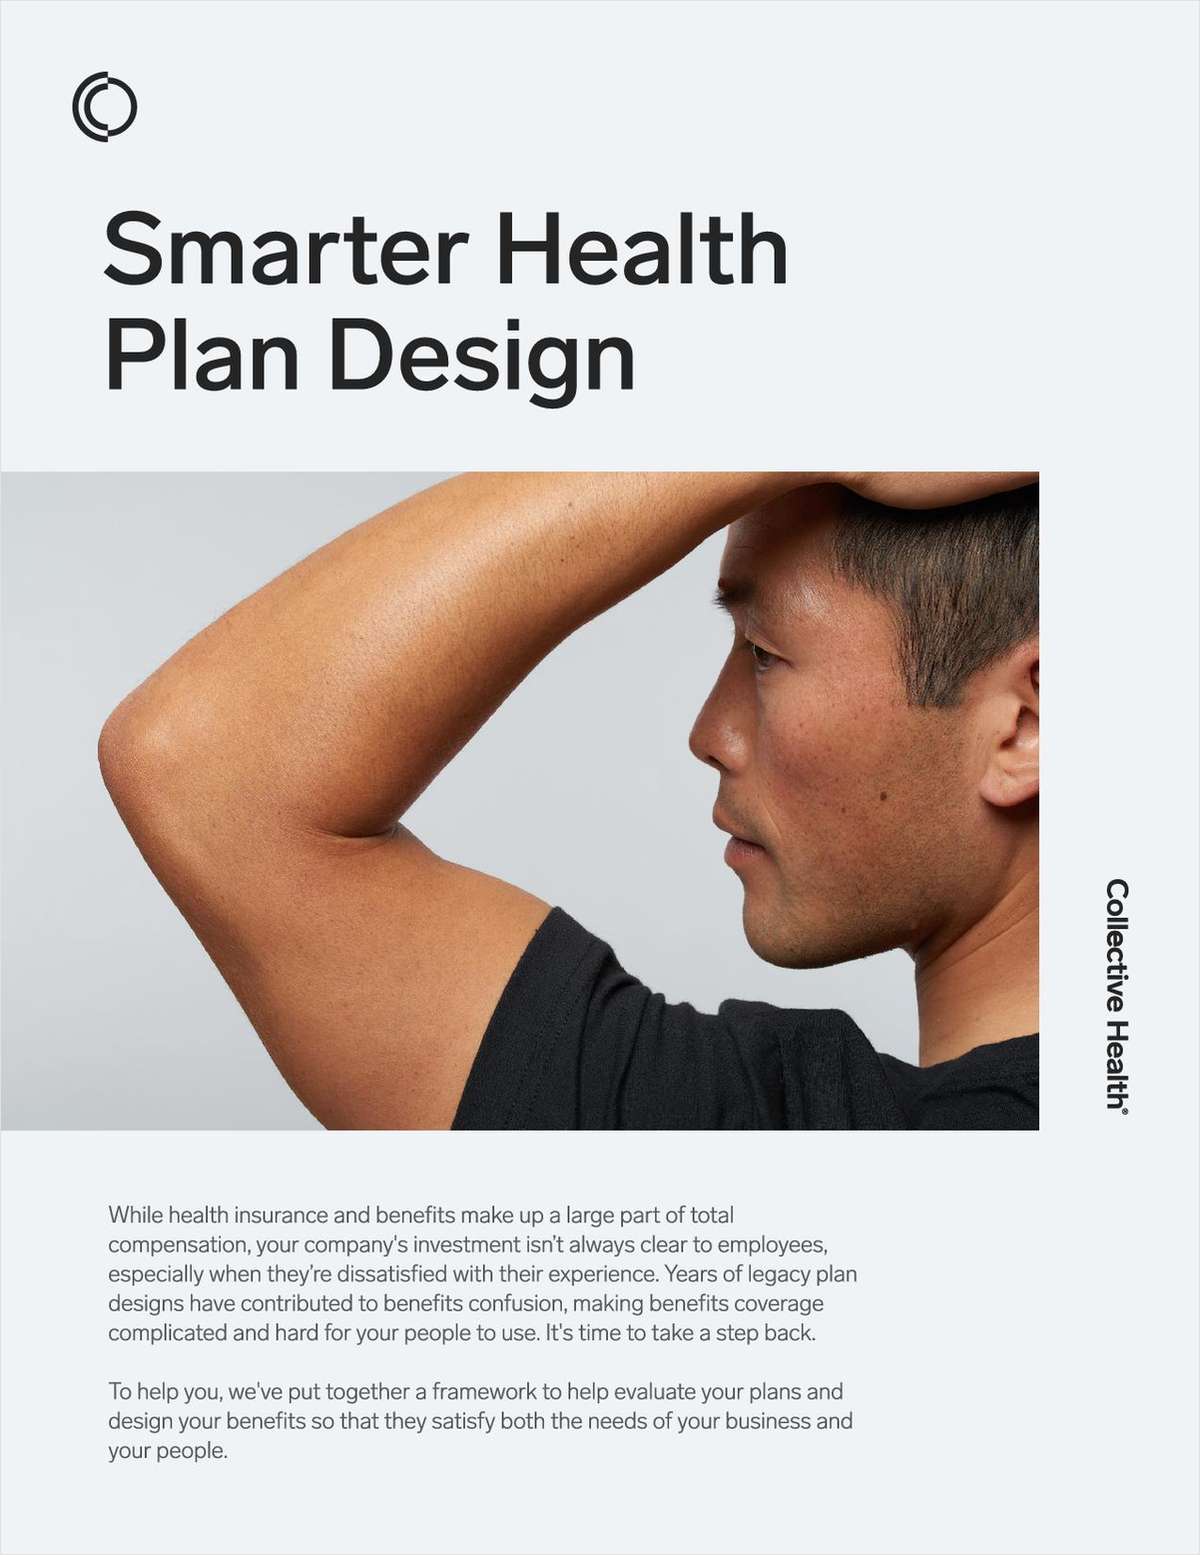 Guide to Smarter Health Plan Design